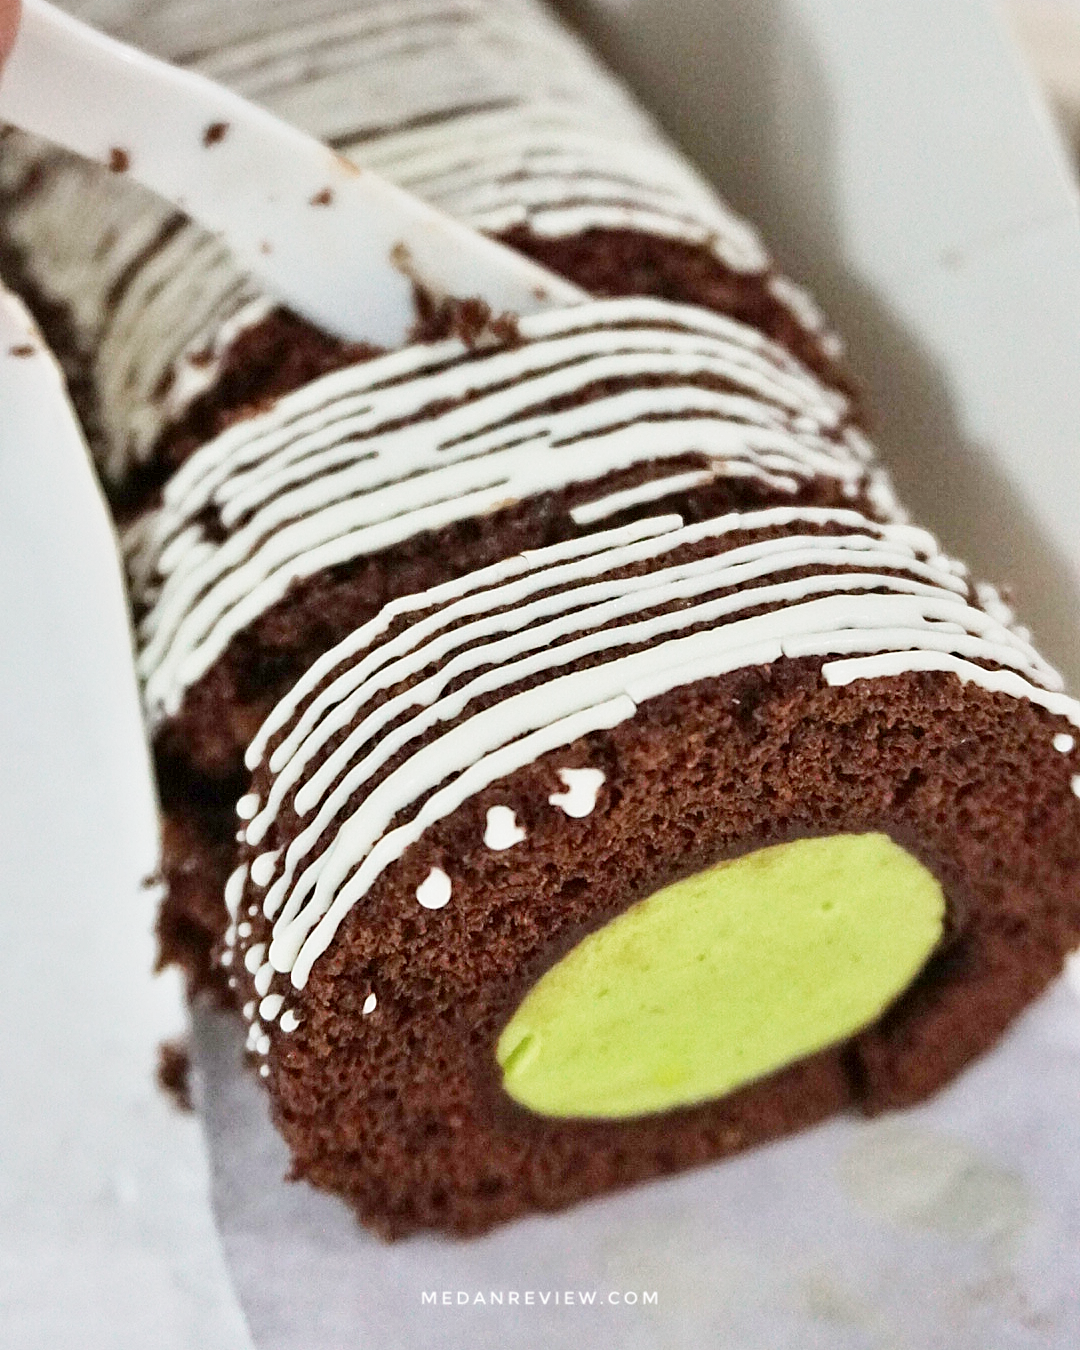 Le Avochoco Roll Cake